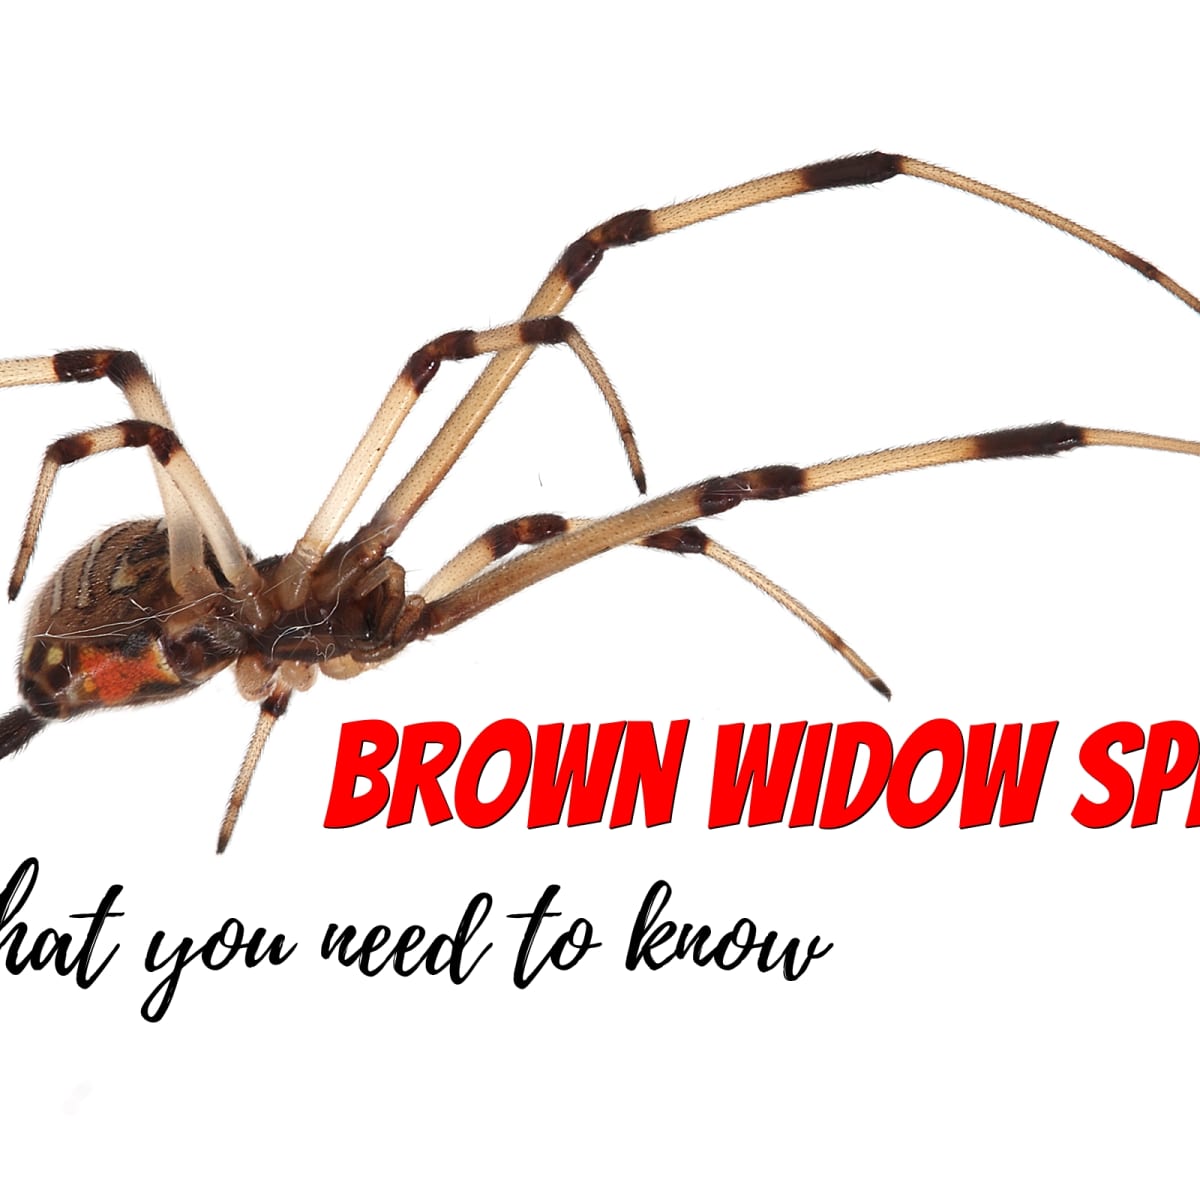 brown black widow bites